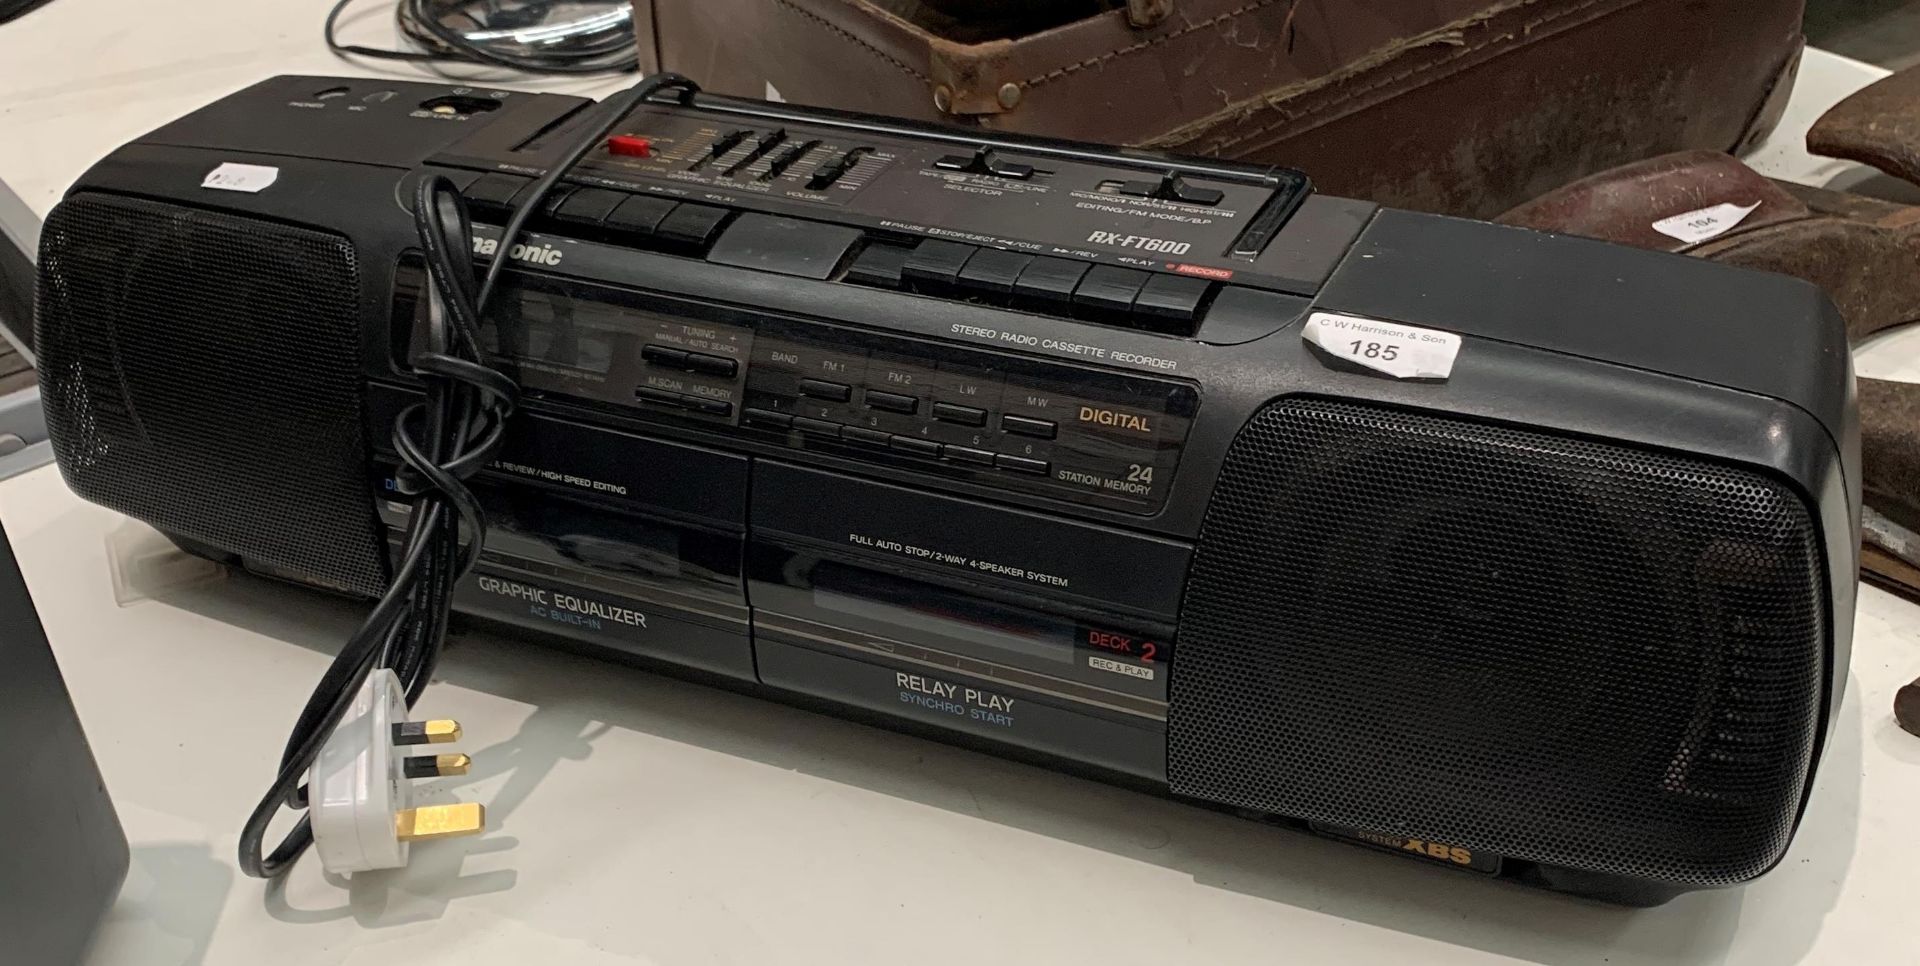 Panasonic RX-FT600 portable radio cassette recorder/player